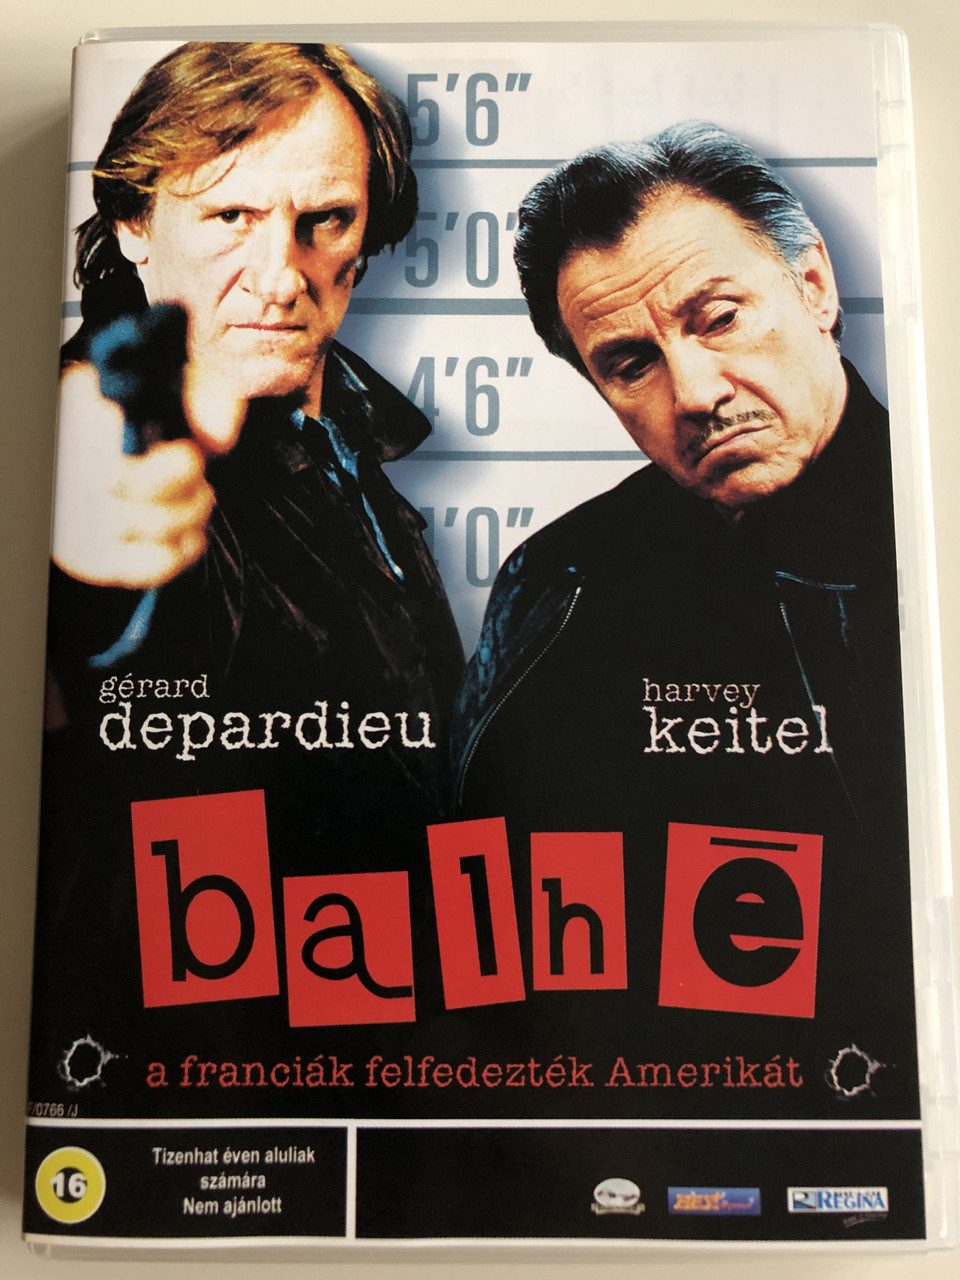 BALHÉ DVD 2003 CRIME SPREE (WANTED) / Directed by Brad Mirman / Starring:  Gérard Depardieu, Harvey Keitel, Johnny Hallyday, Renaud - Bible in My  Language